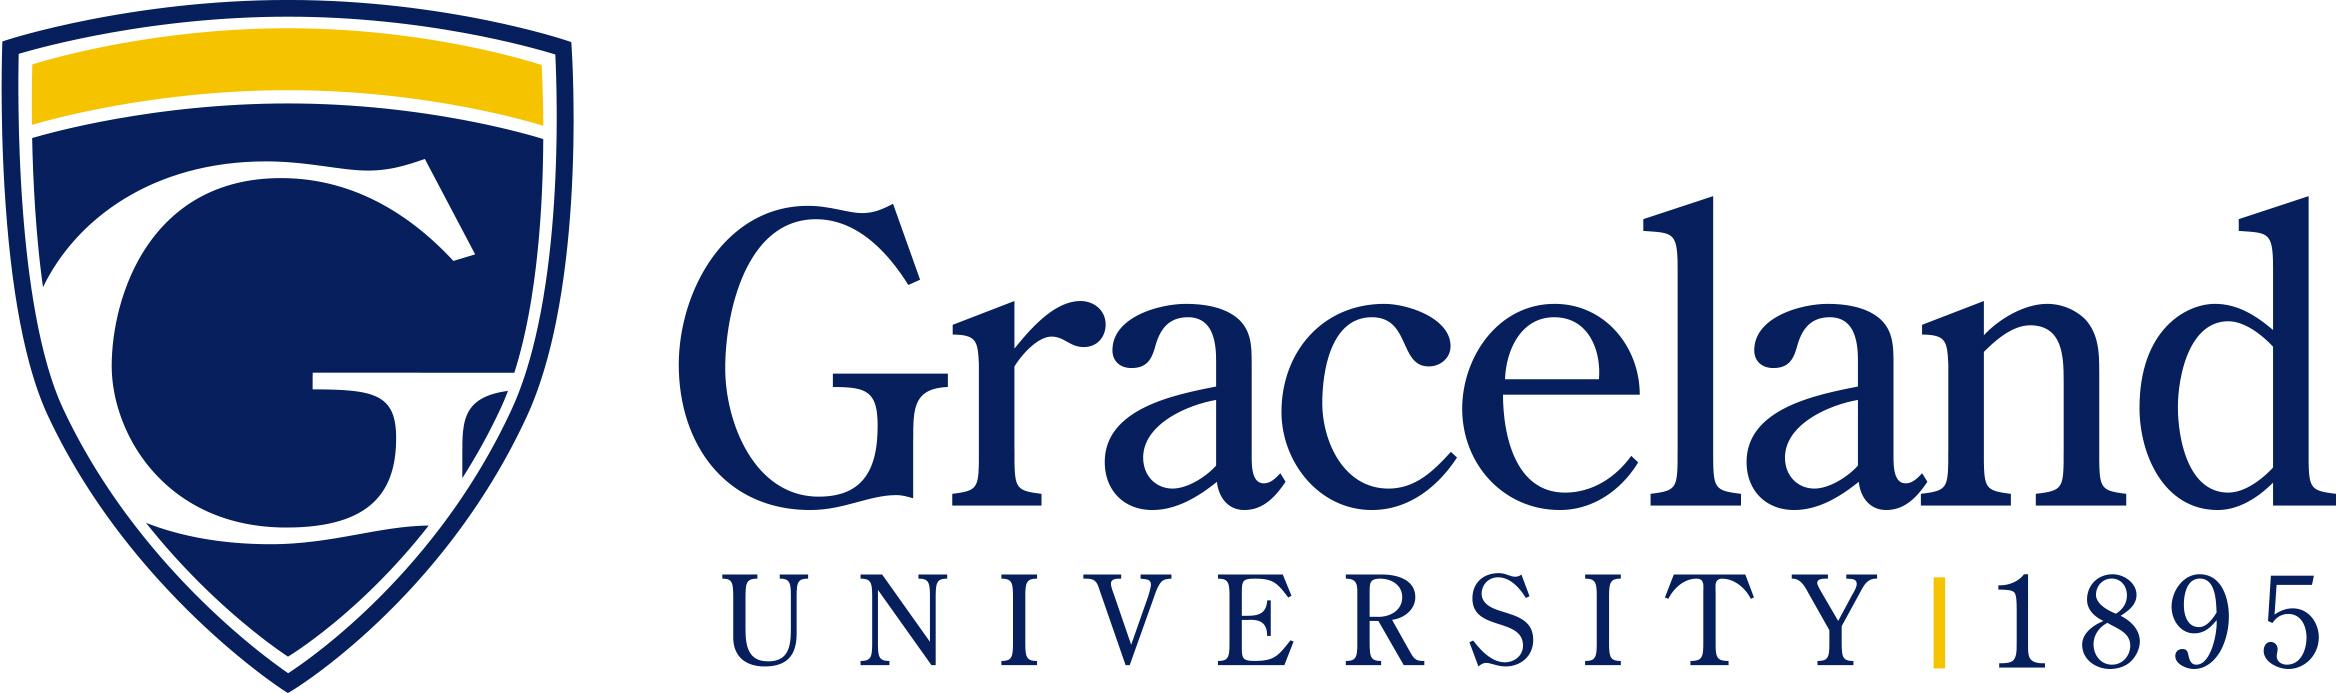 University Shield Logo - Visual Identity View. The Graceland Identity